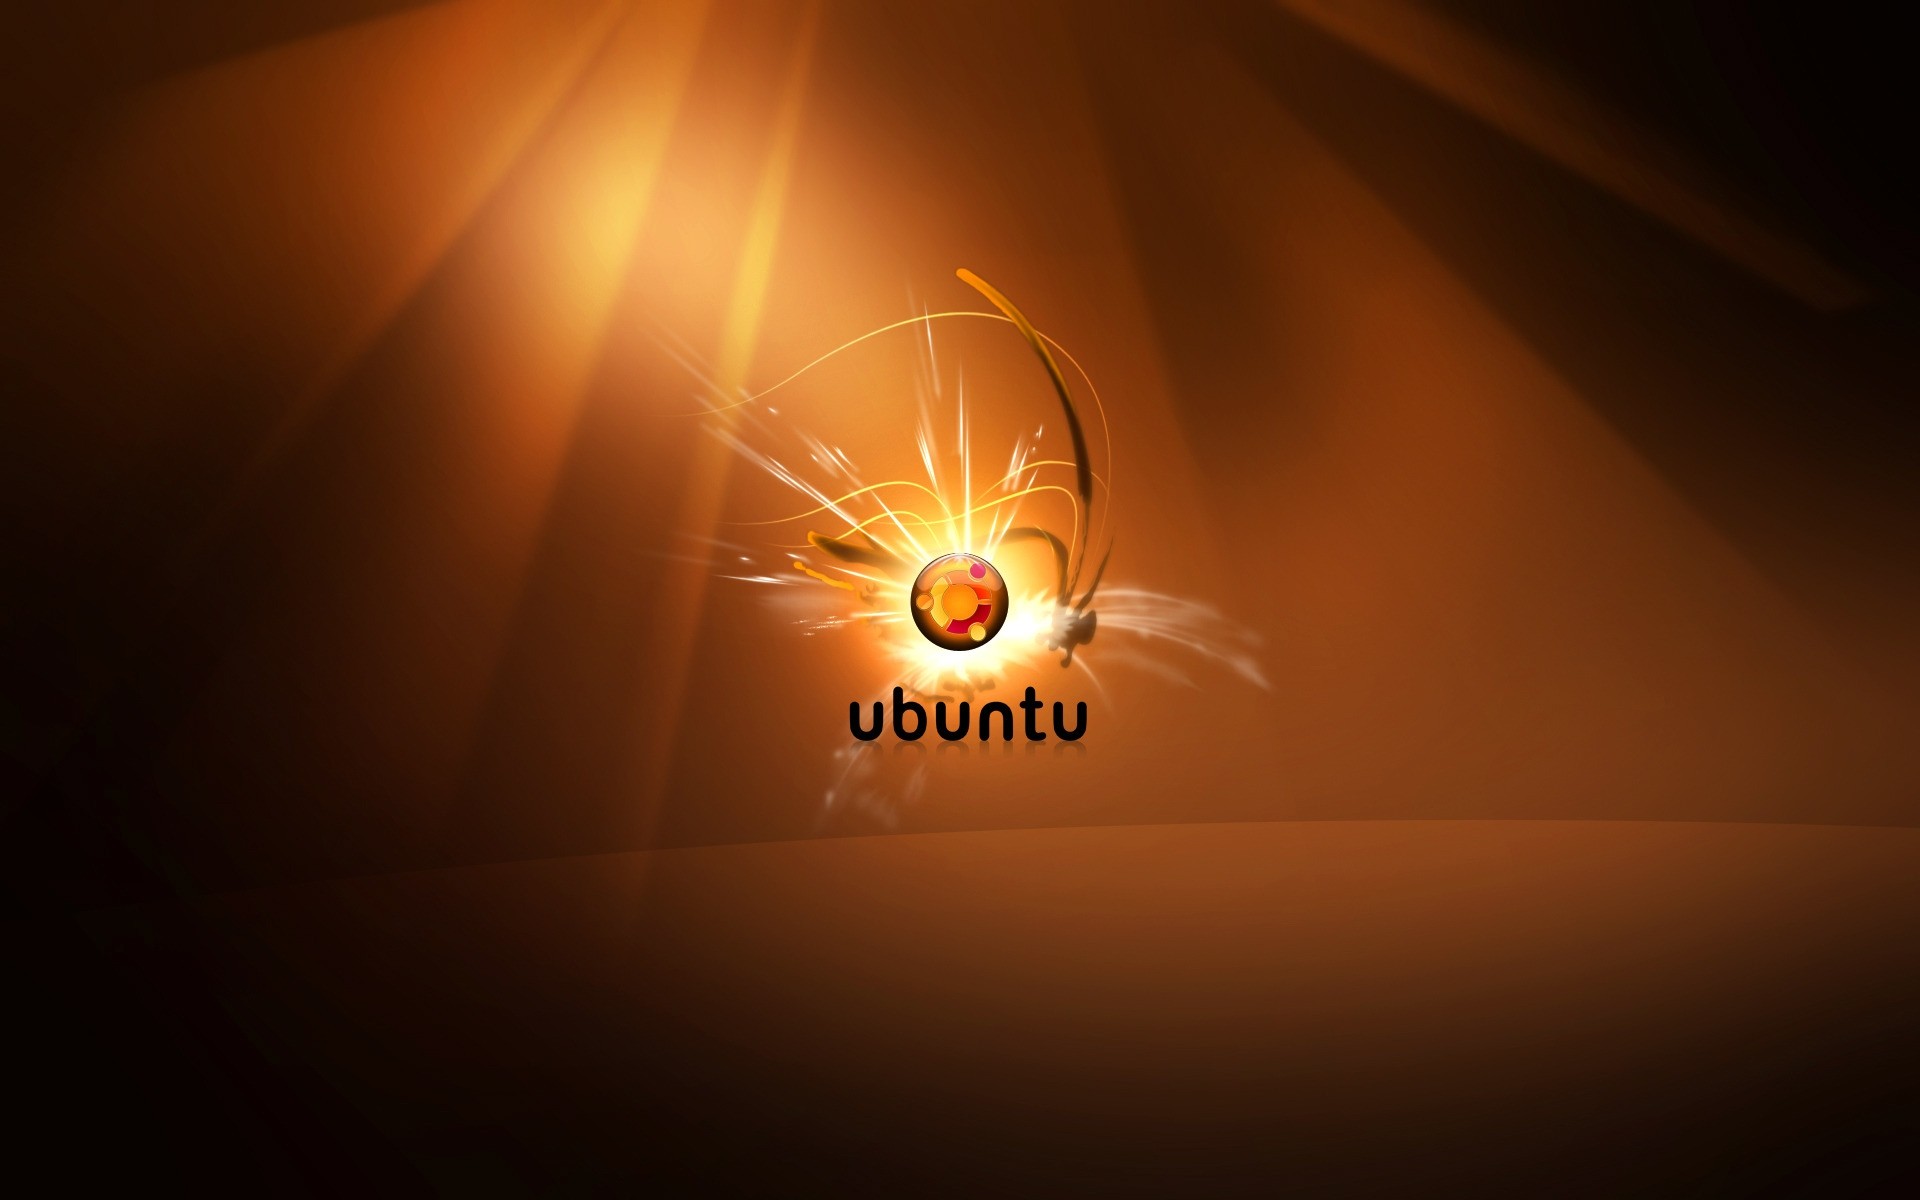 linux light flame bright abstract blur energy luminescence dark desktop shining design art background tech ubuntu